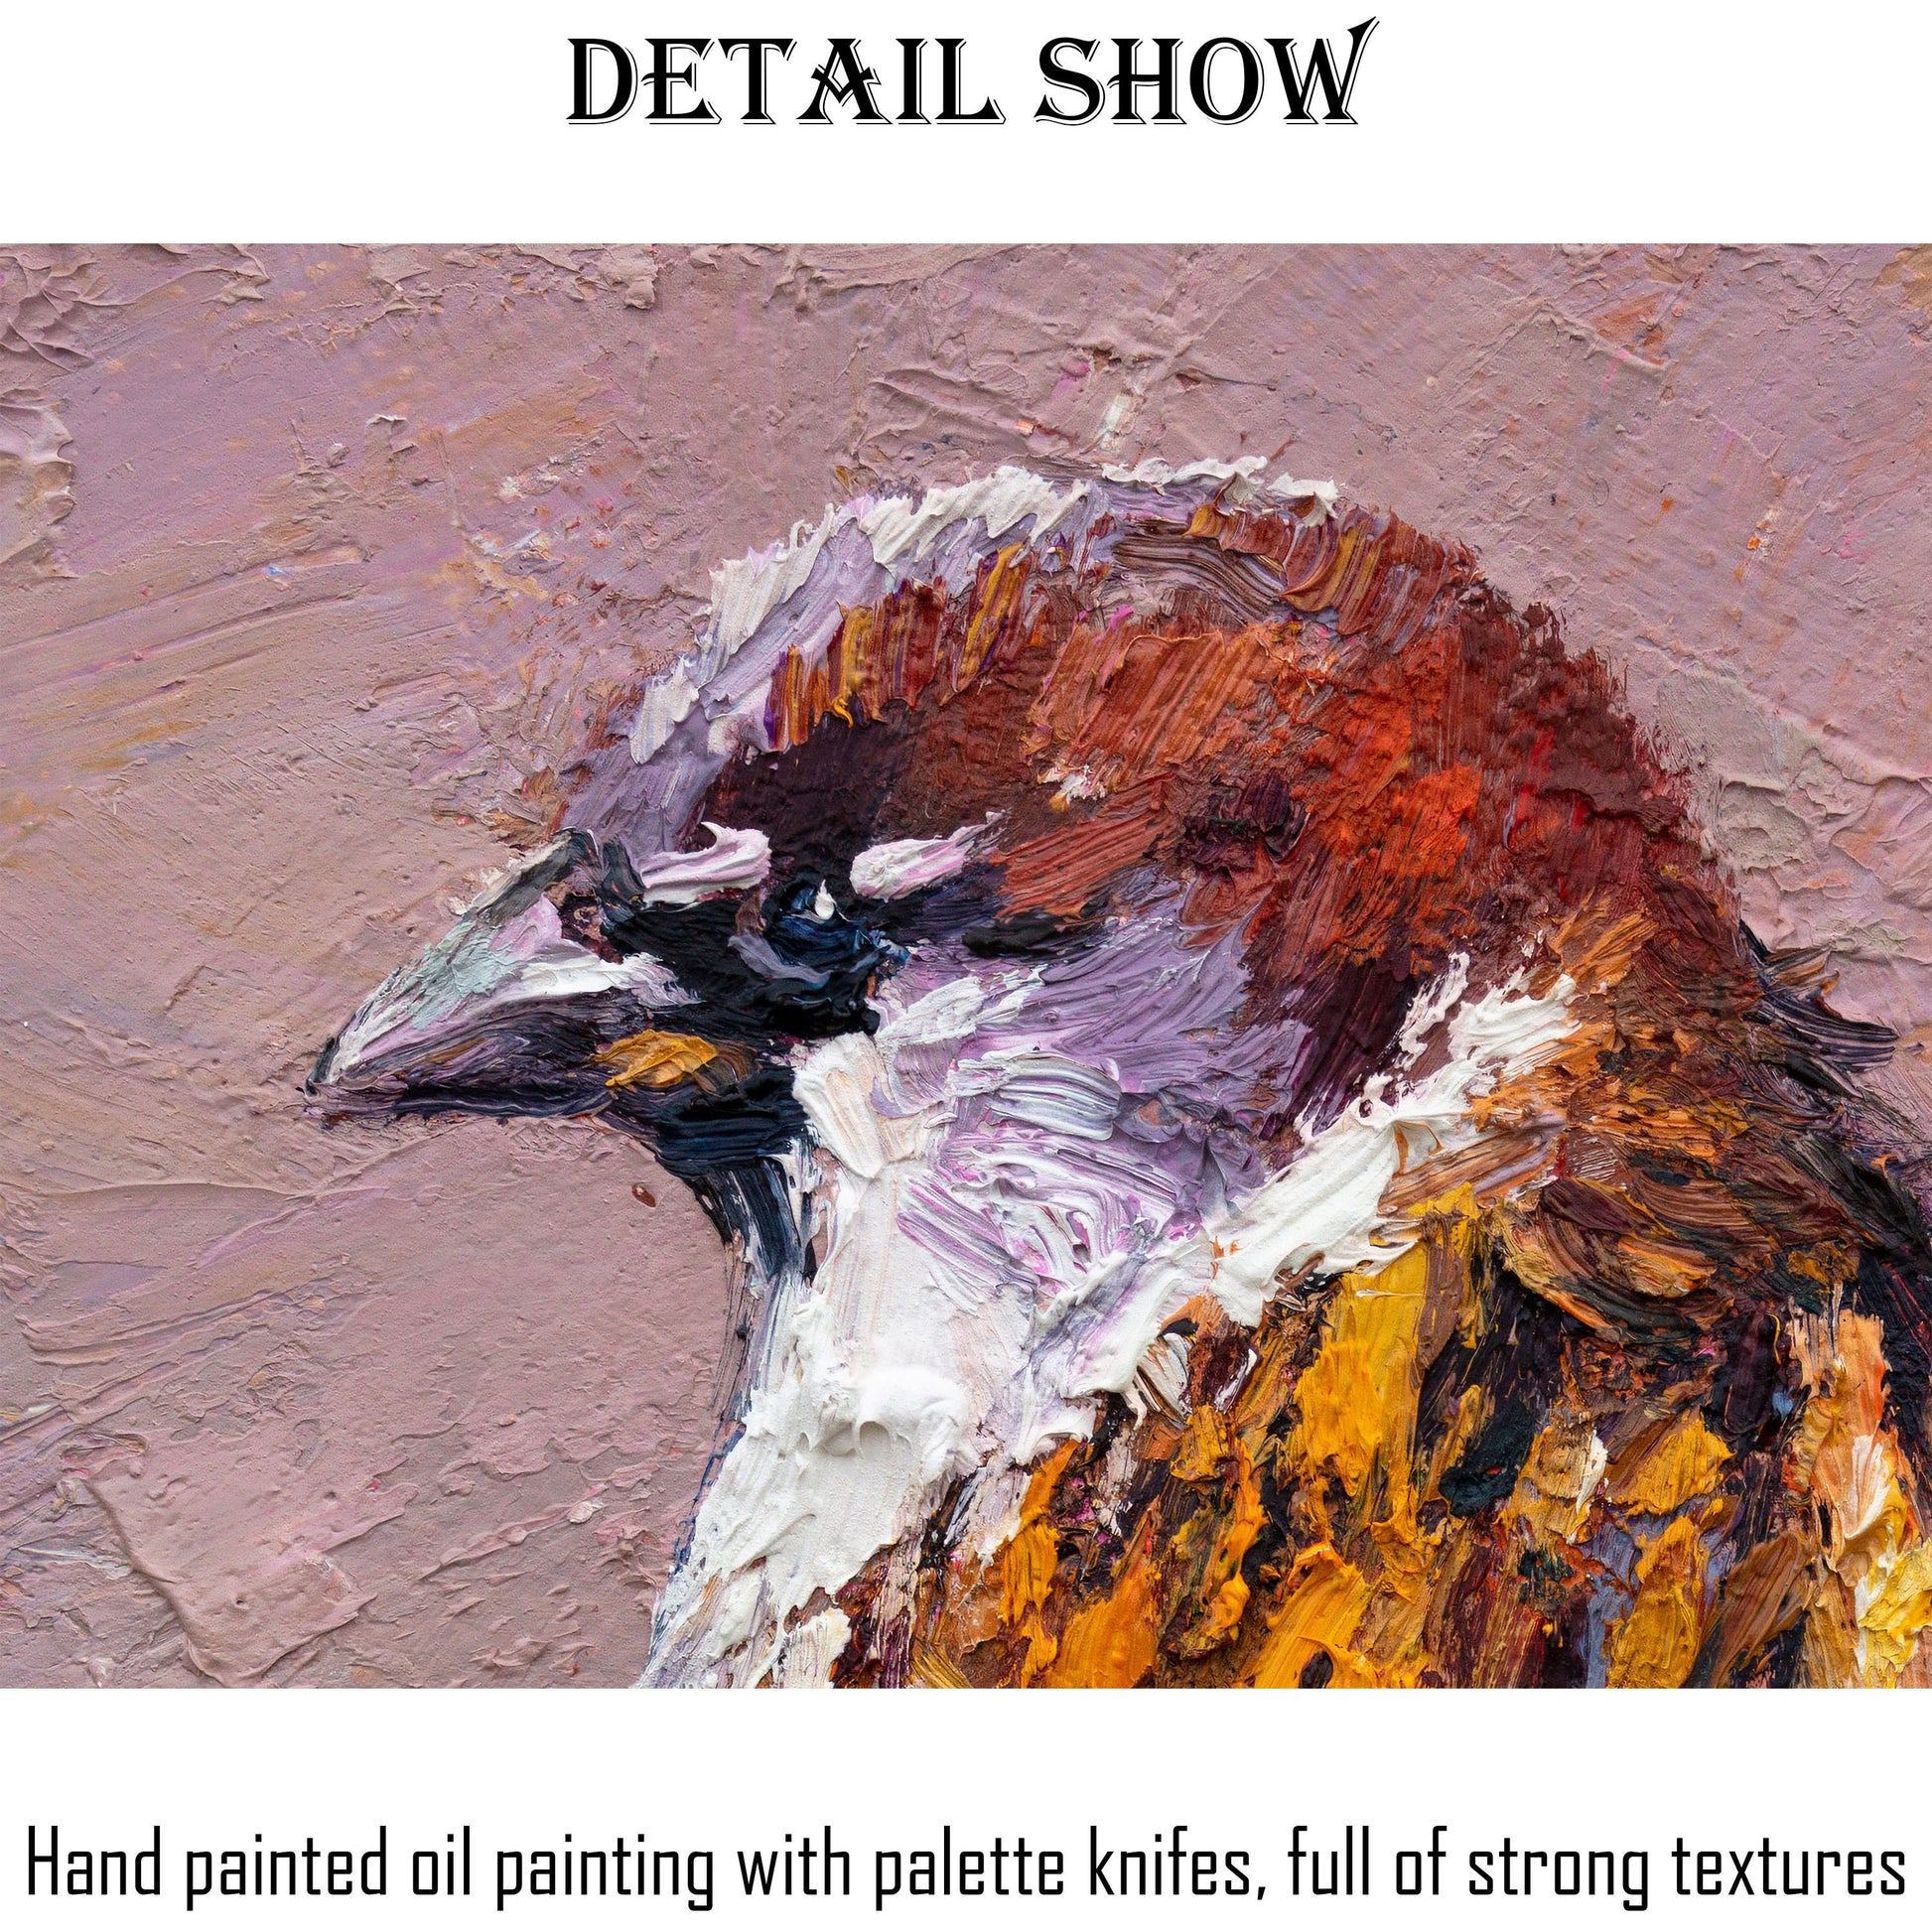 Canvas Painting Sparrow Bird, Abstract Canvas Art, Oil Painting Abstract, Bird Artwork, Oil Painting Original, Modern Art, Wall Art Painting